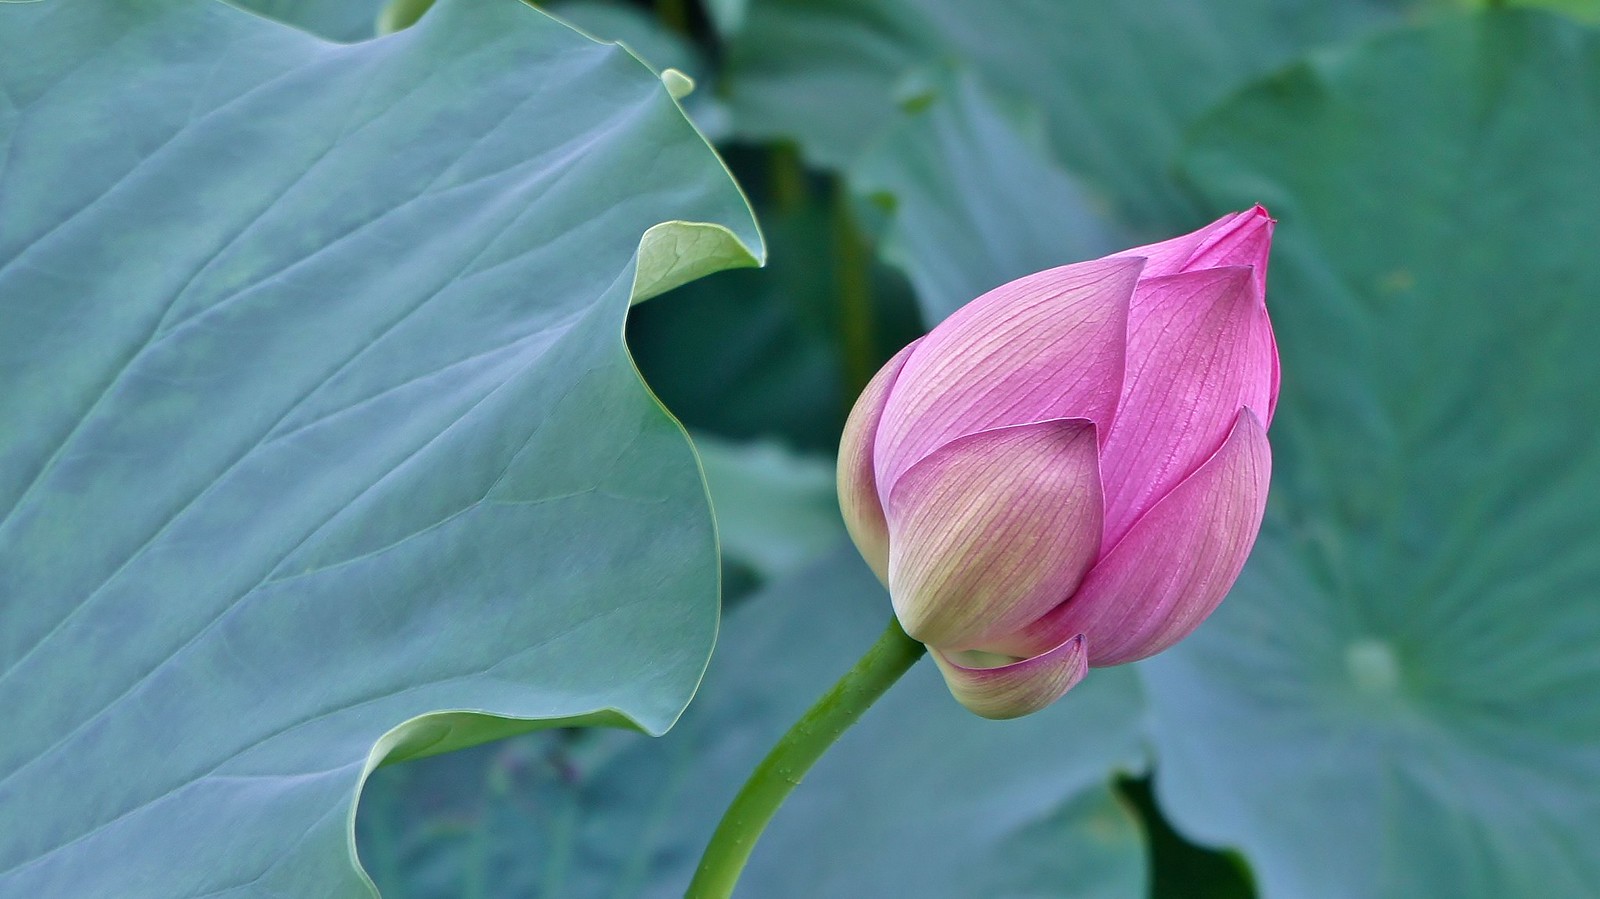 Lotus at Ueno Park